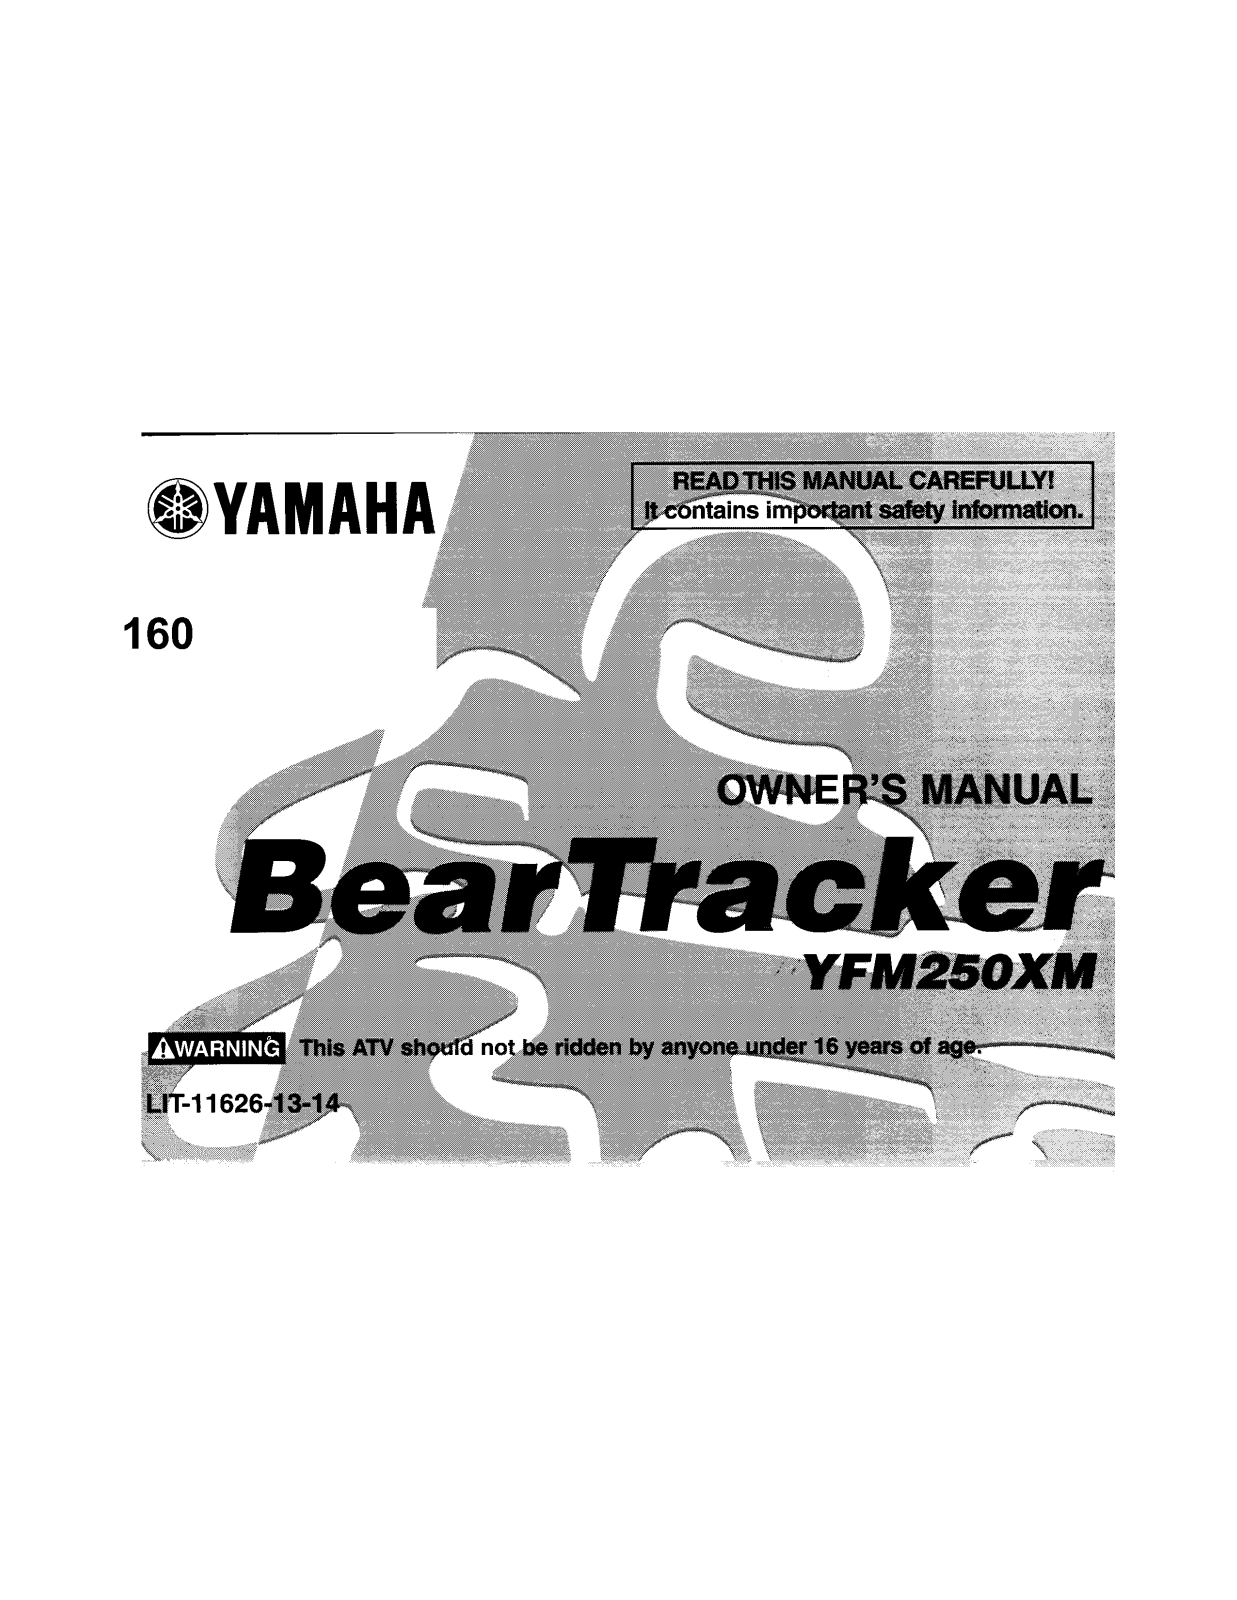 Yamaha YFM250XM Manual